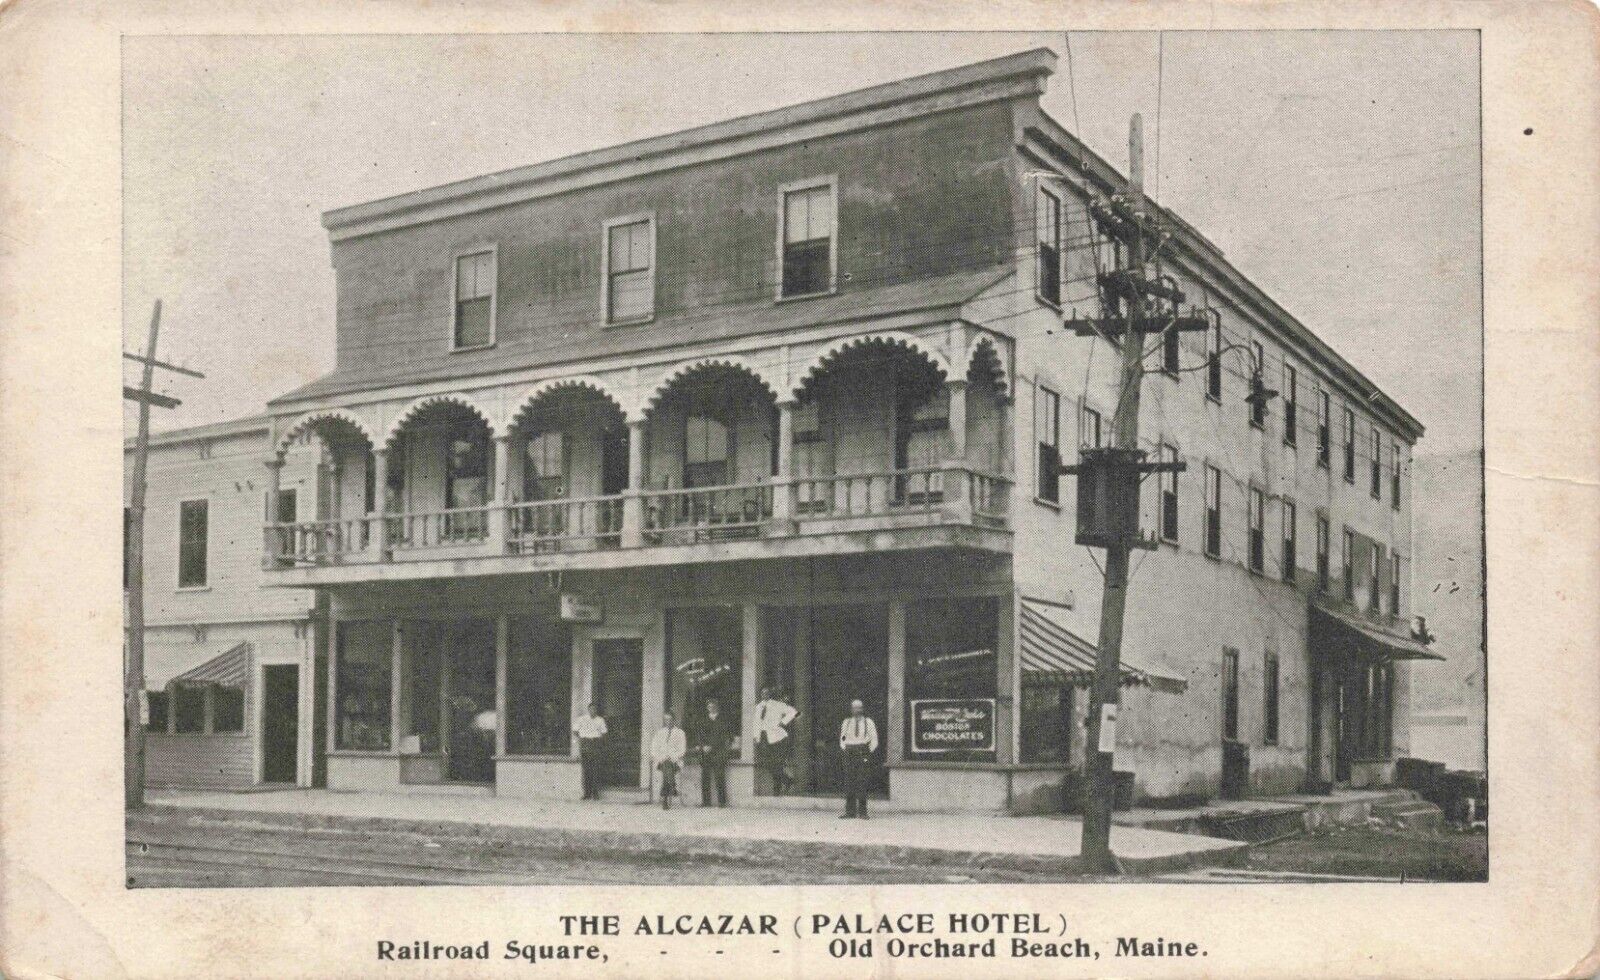 Old Orchard Beach Maine Alcazar (Palace Hotel) Railroad Square Antique Postcard